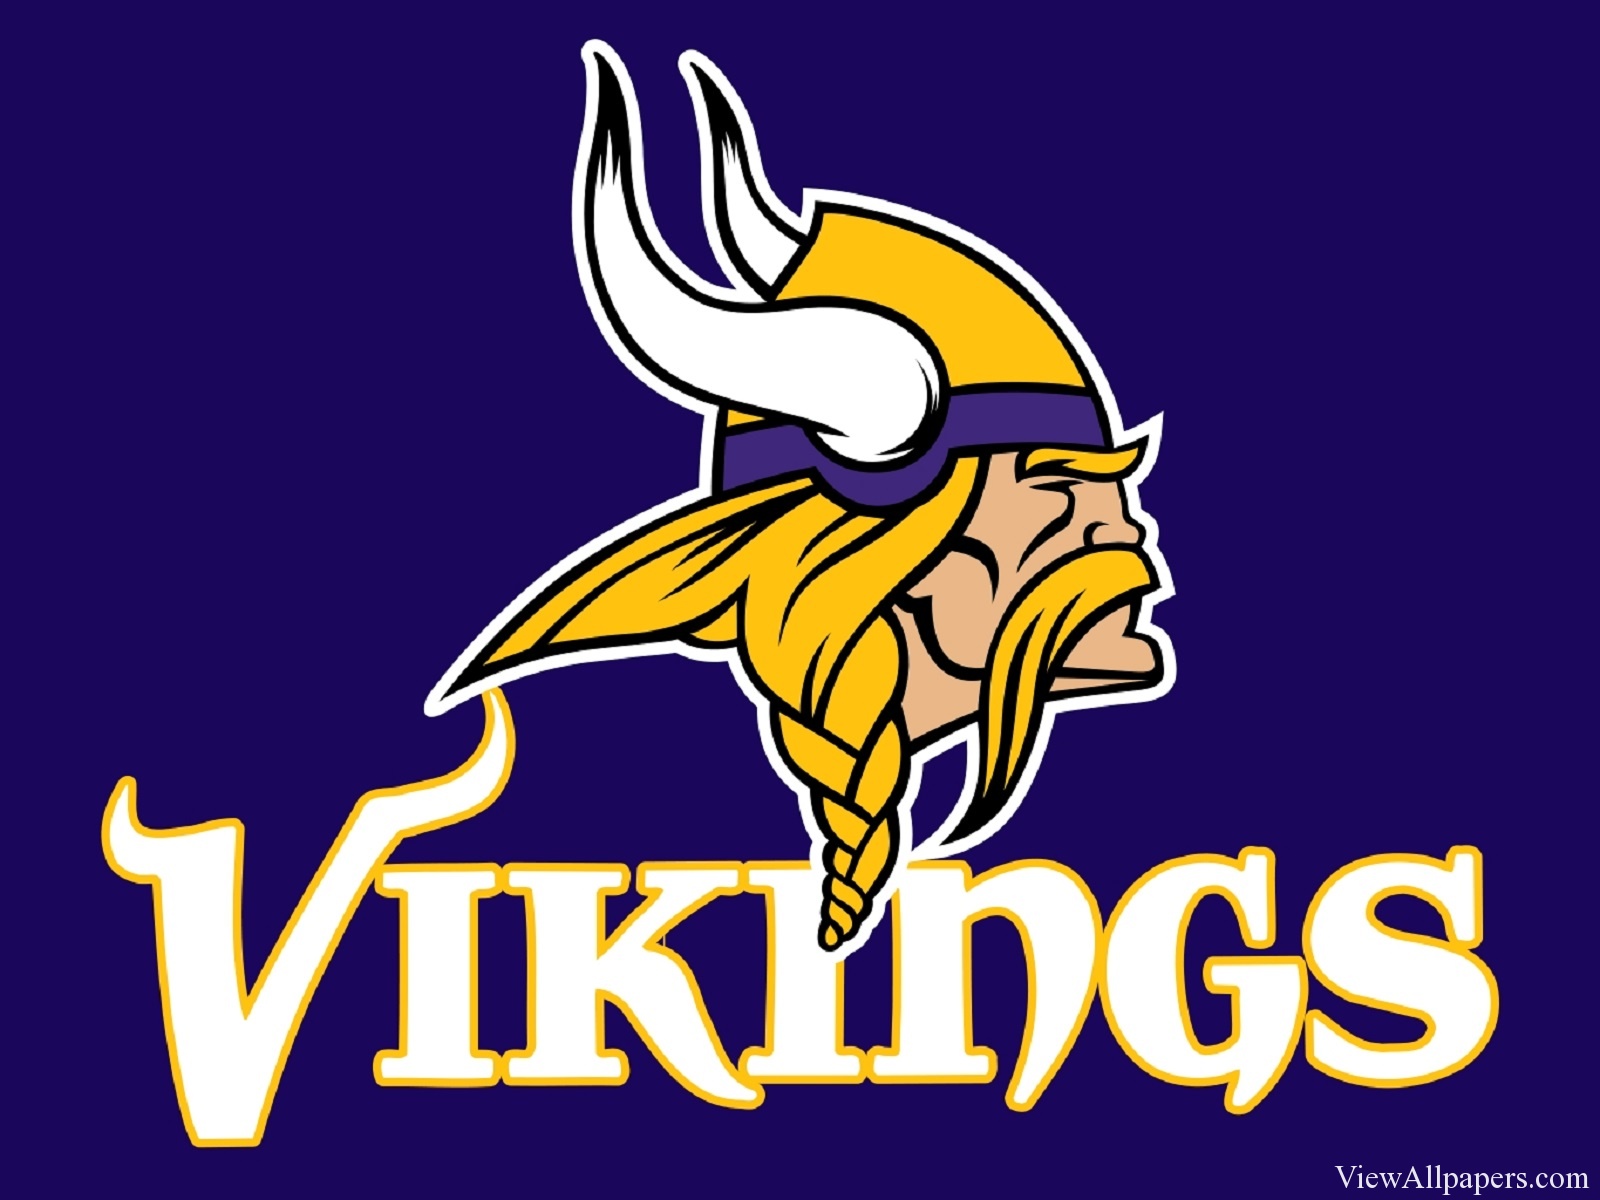 Minnesota Vikings Logo HD Resolution Wallpaper Free download